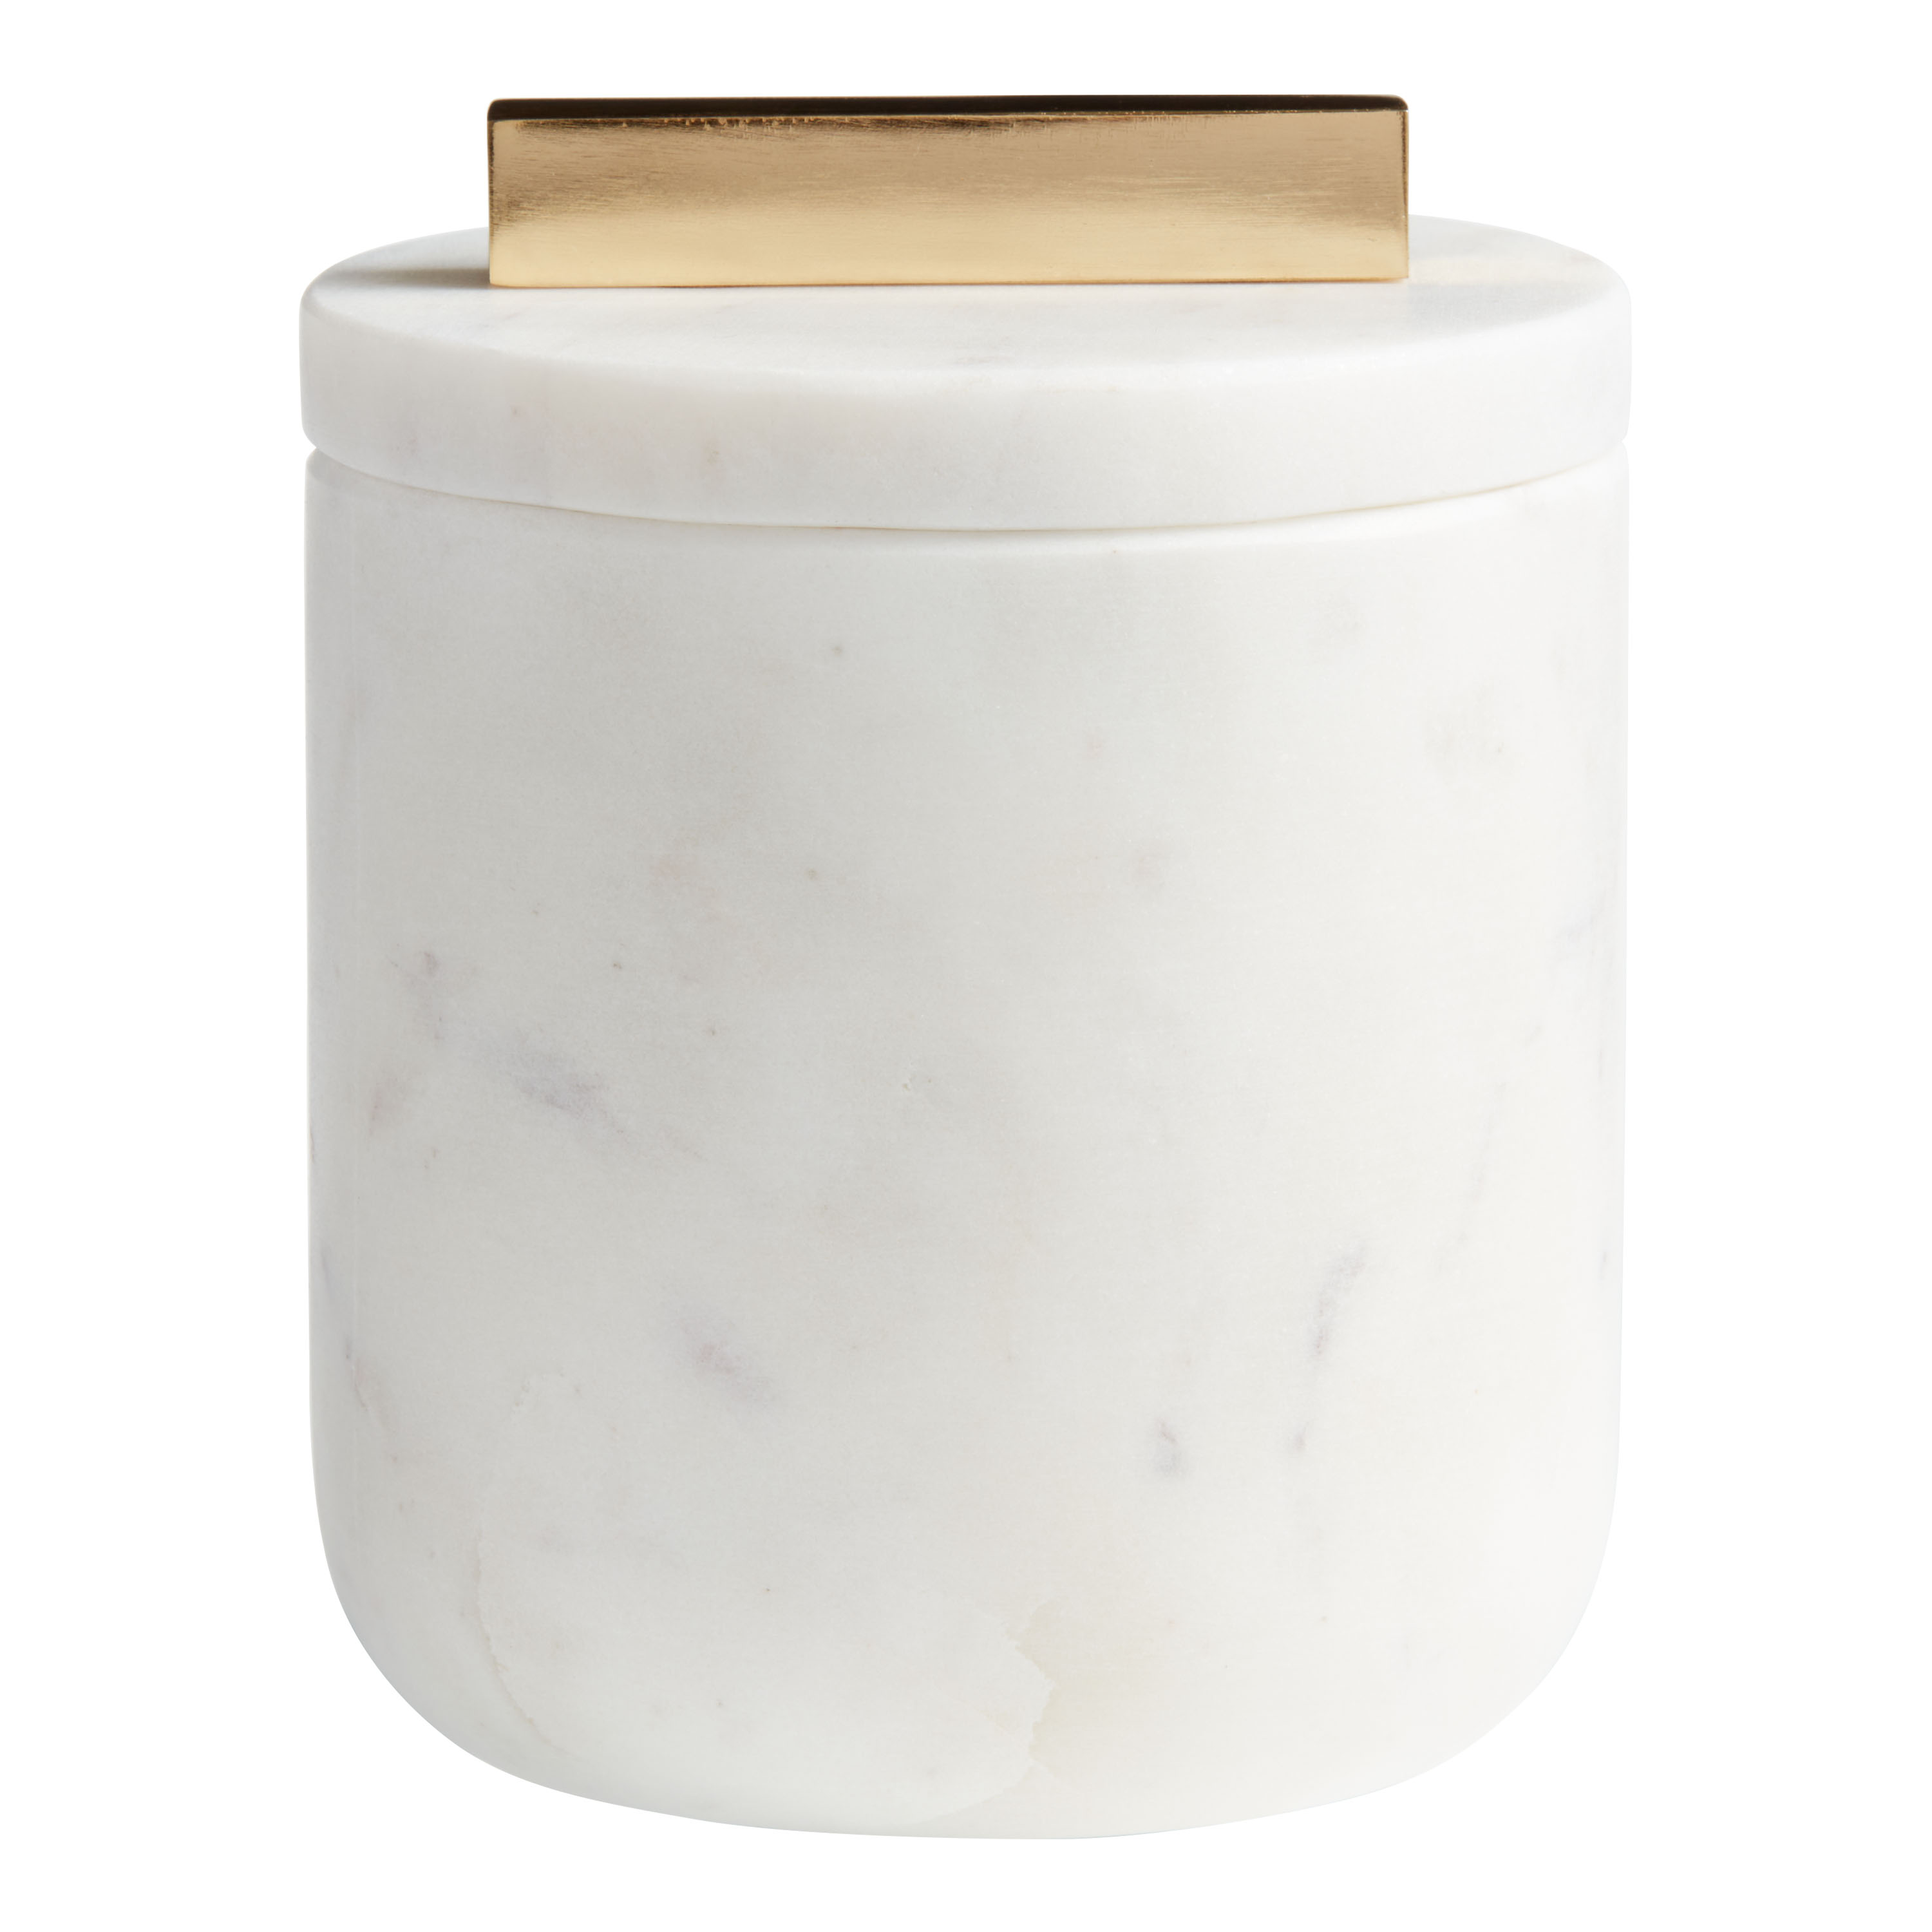 Mid Century Modern Alabaster Shower Soap Dish Bar Soap Holder Tray